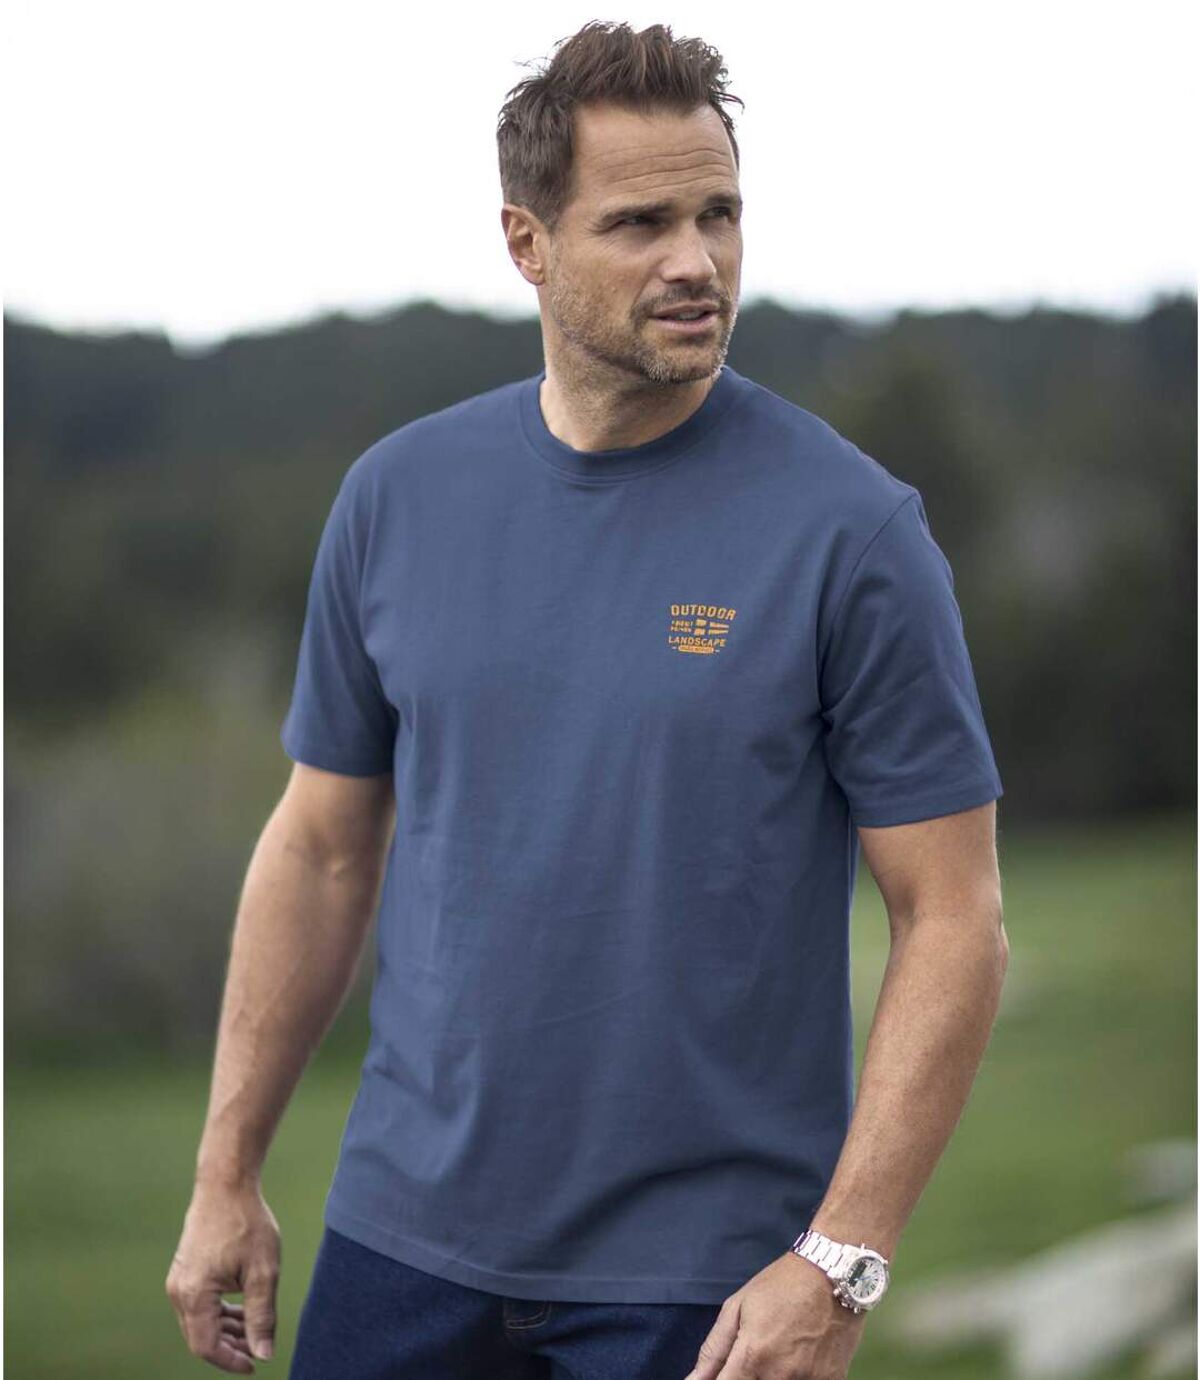 Pack of 4 Men's Casual T-Shirts - Khaki Navy Orange  Atlas For Men